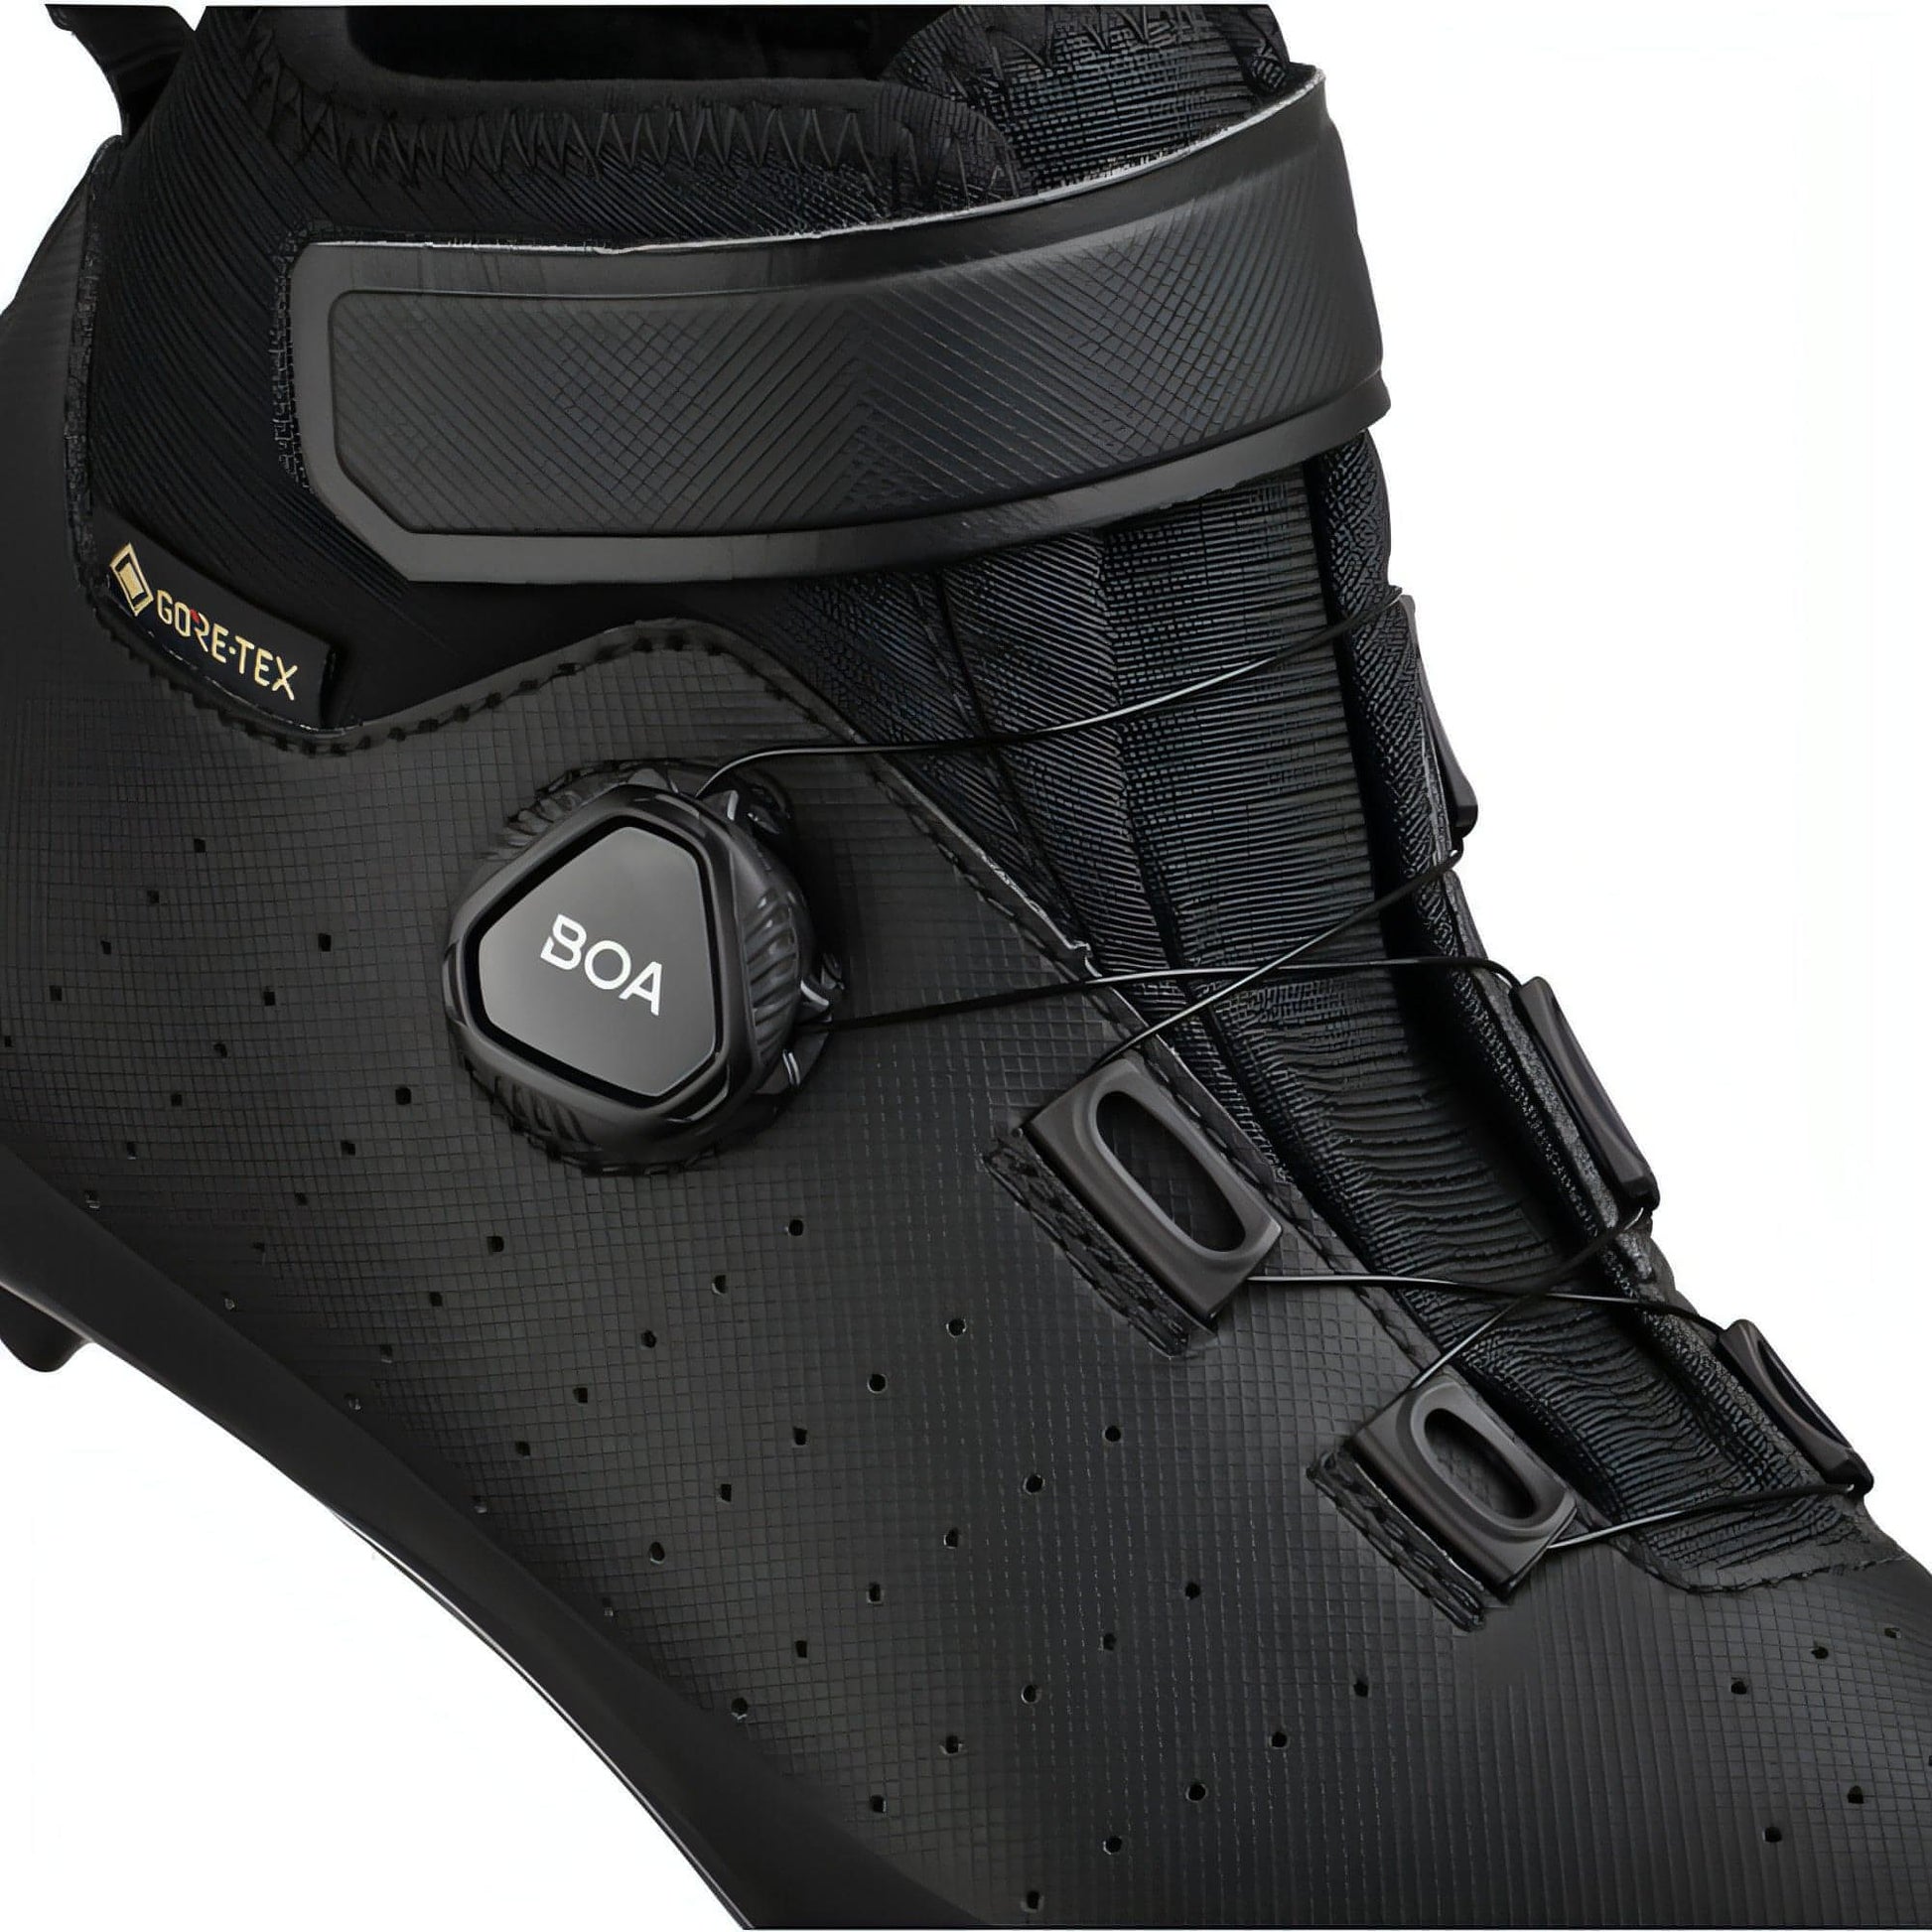 Fizik Tempo Artica  Gtx Winter Boots Tpr5Agr1V1010 Details